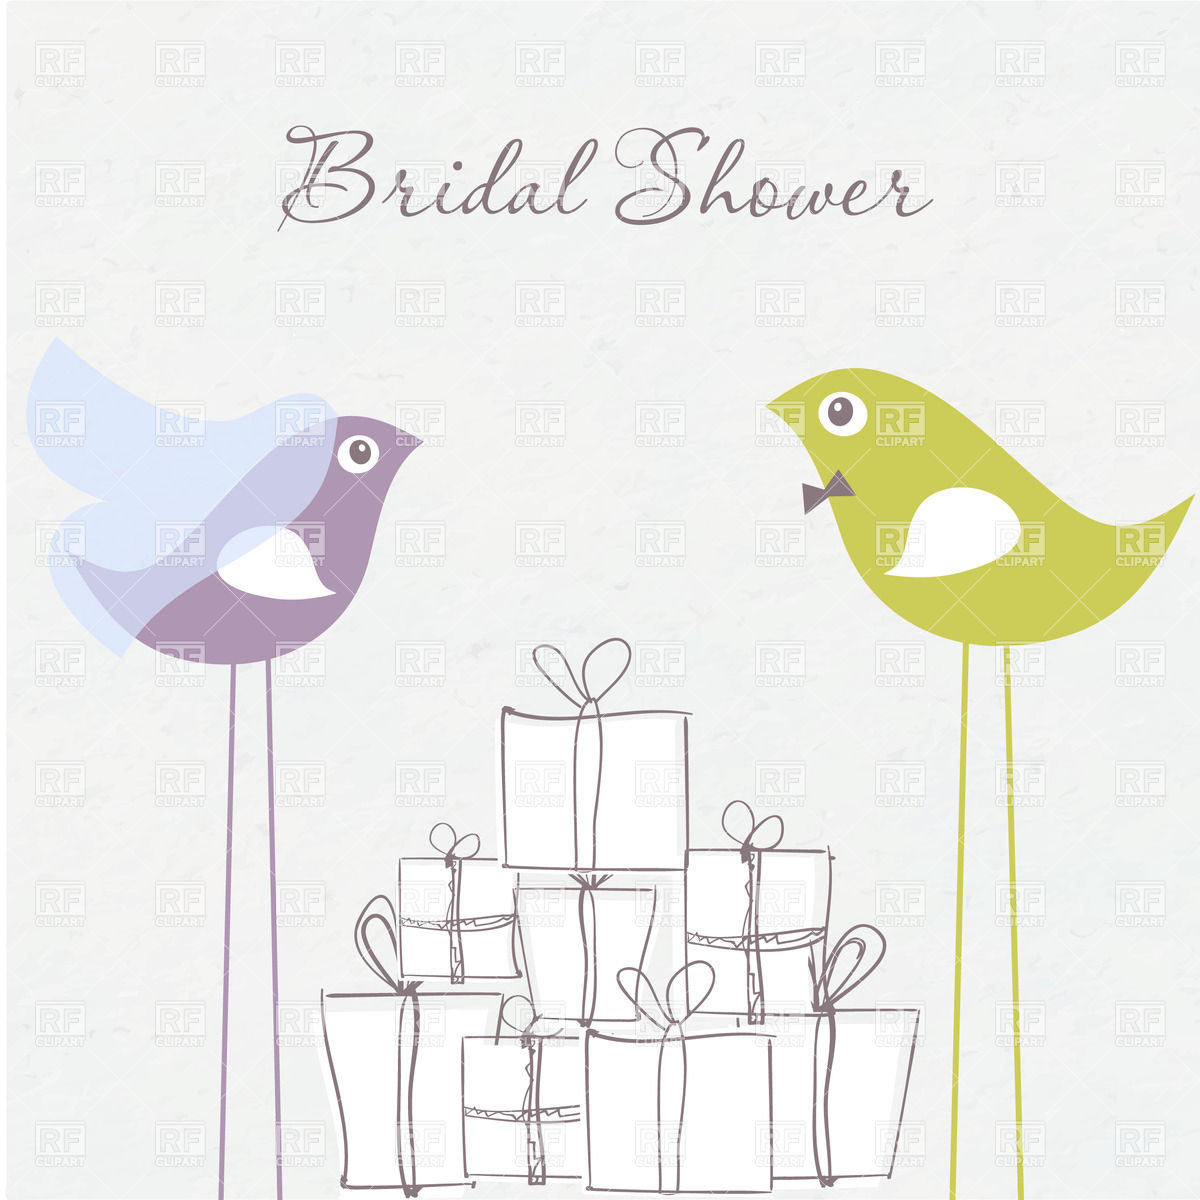 Bridal shower clipart image 